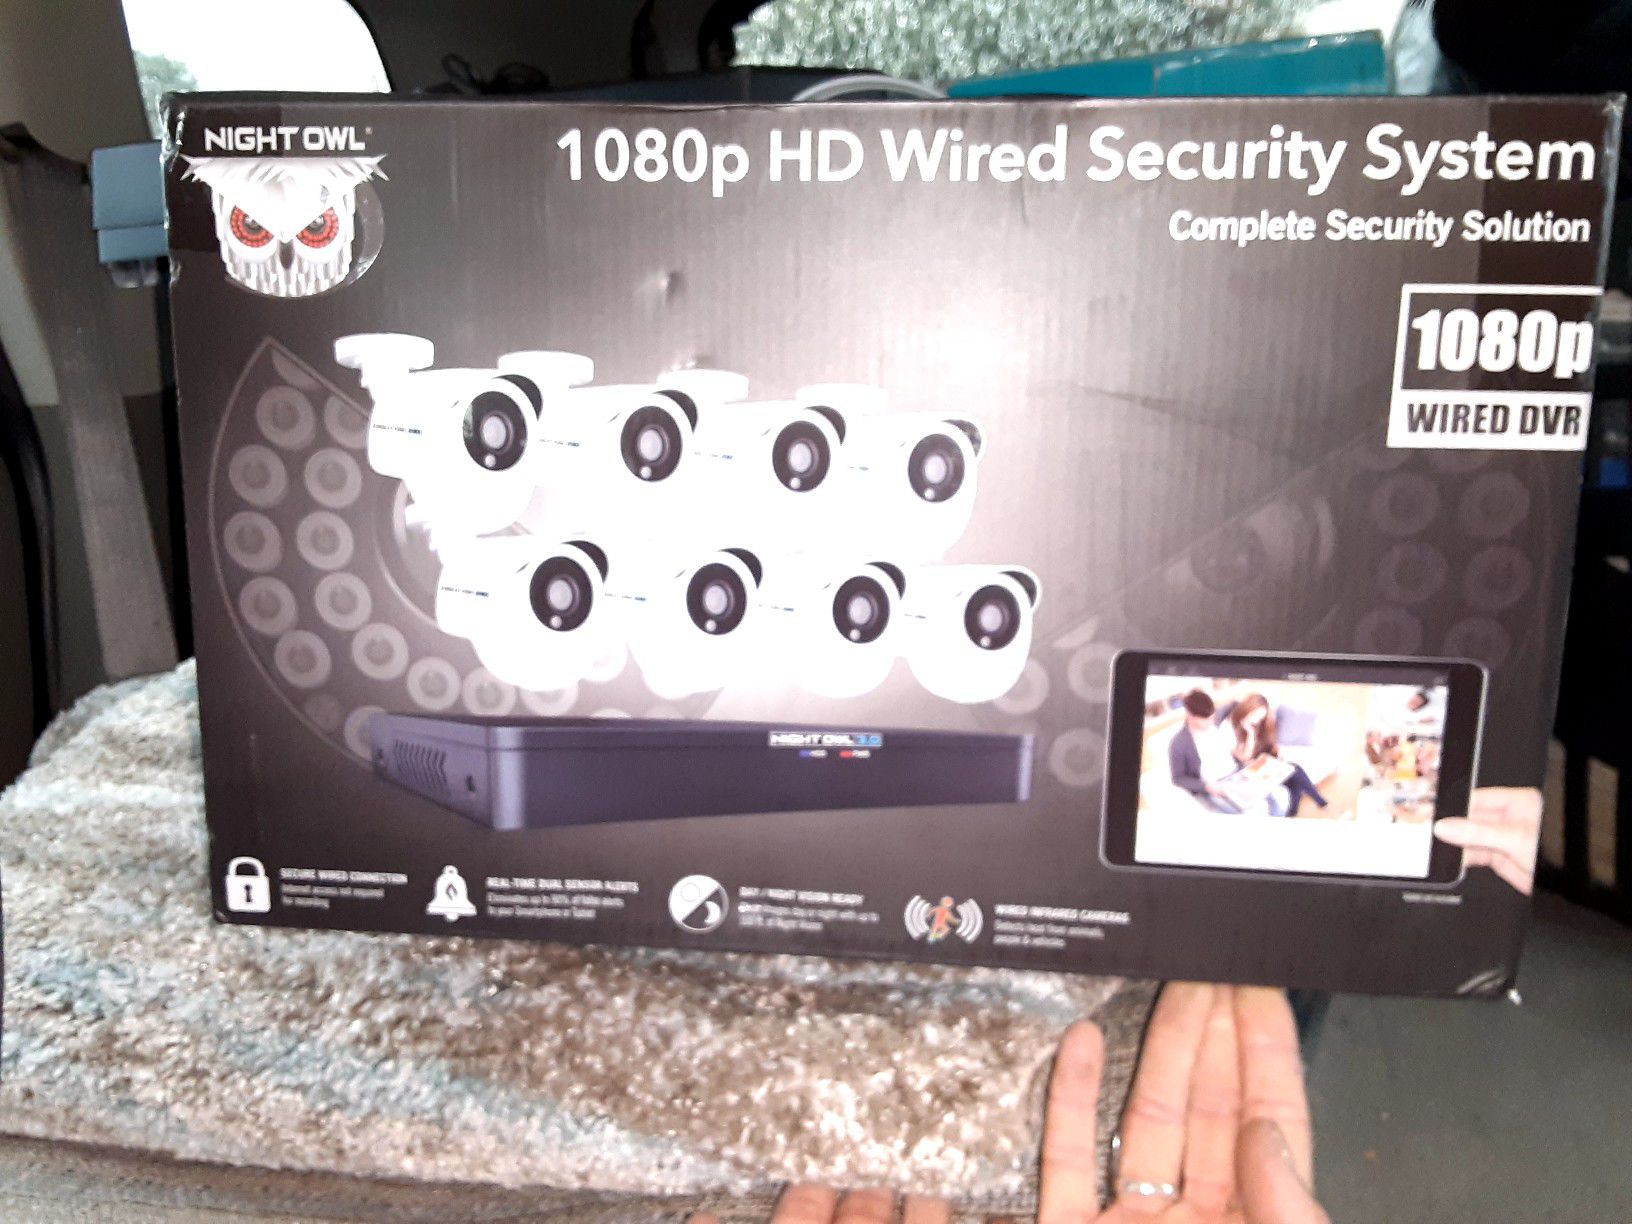 Night owl security camera system